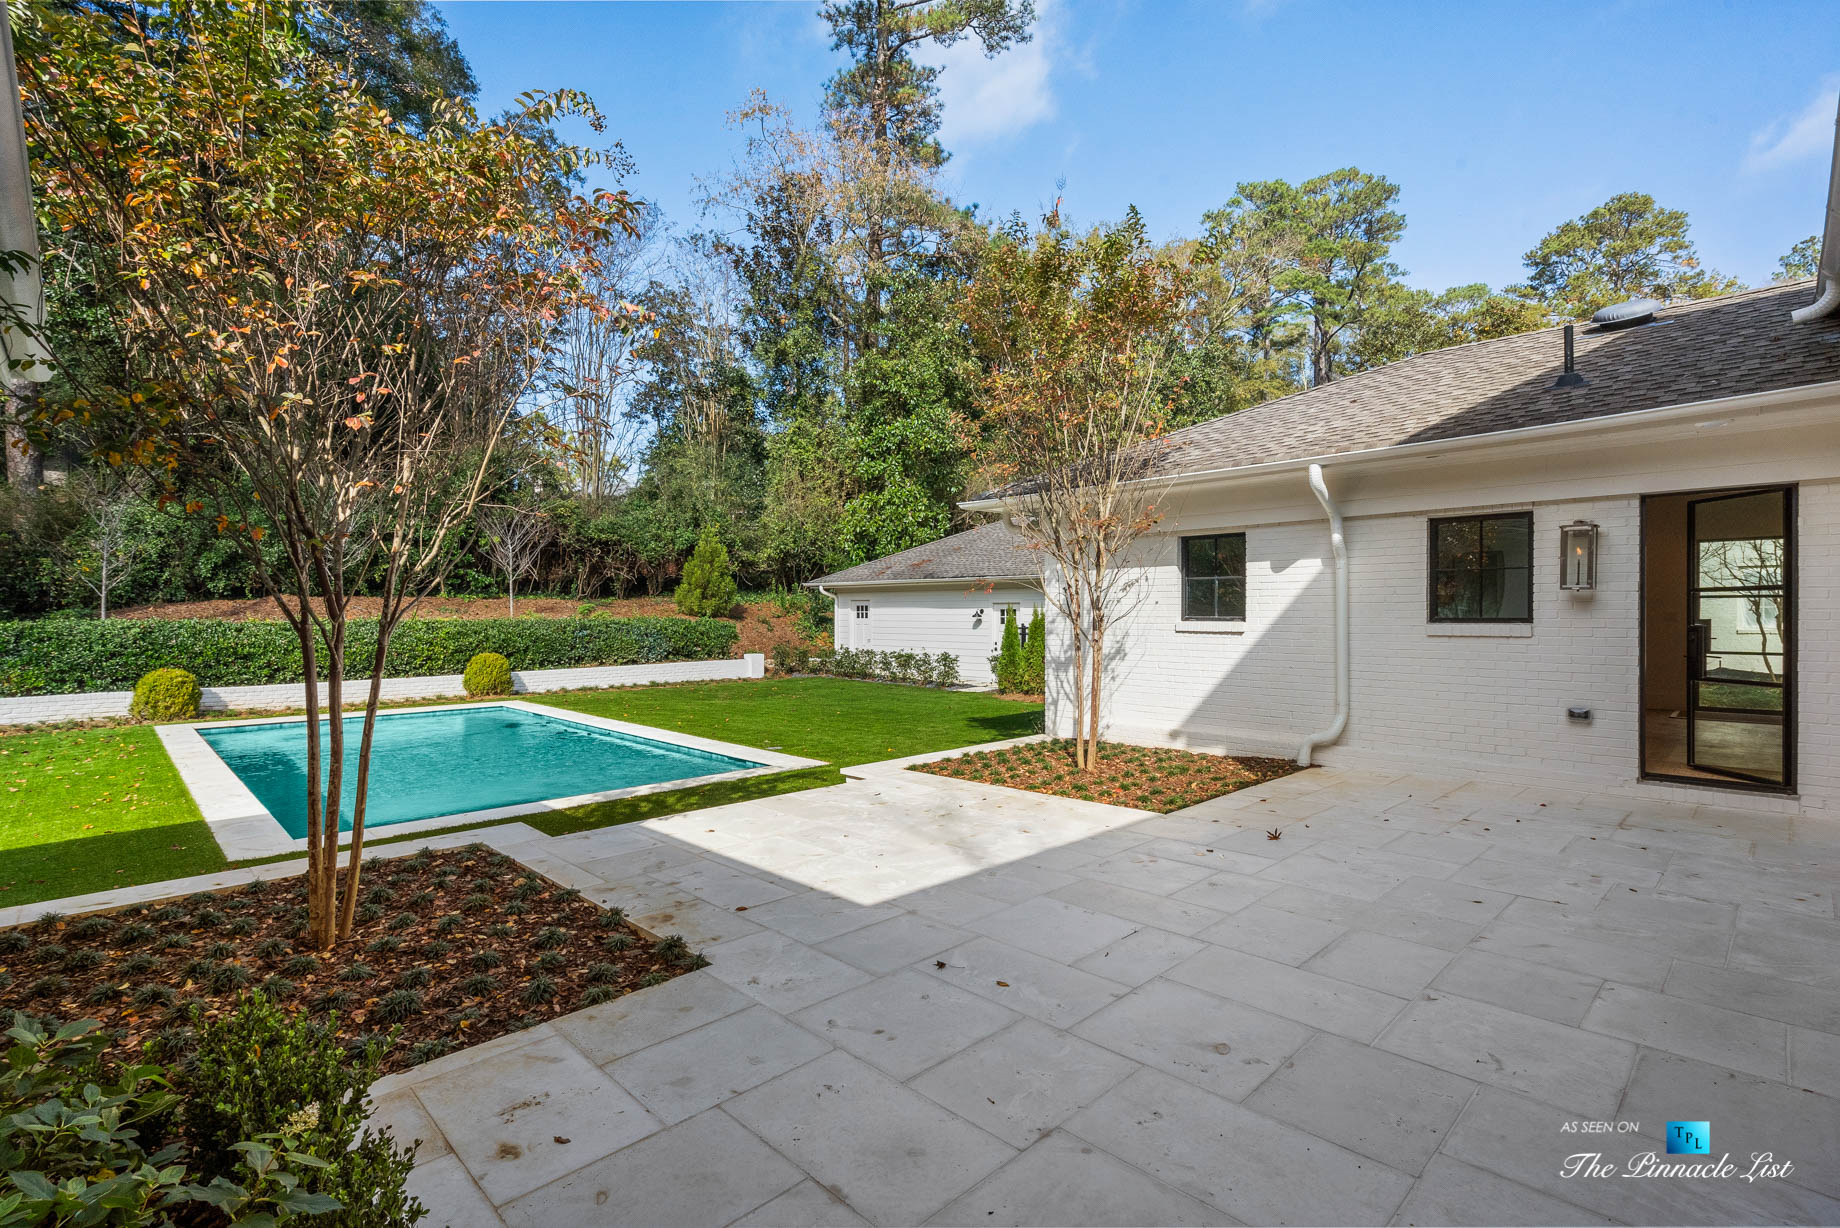 447 Valley Rd NW, Atlanta, GA, USA - Back Yard Pool and Courtyard - Luxury Real Estate - Tuxedo Park Home